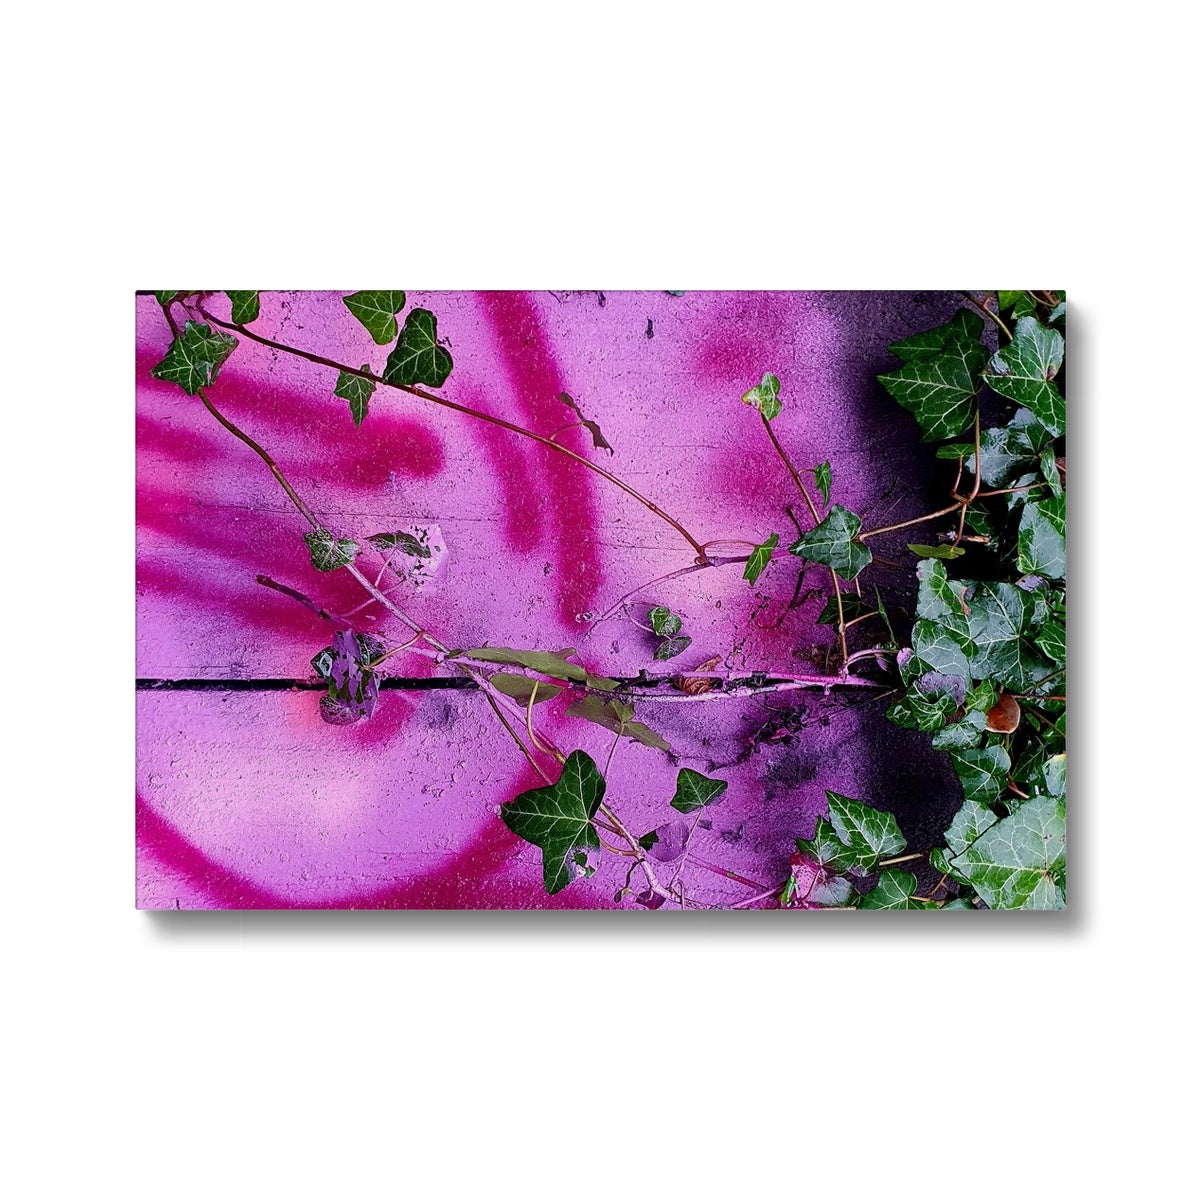 Pink Ivy - Glasgow Microcosm  Eco Canvas